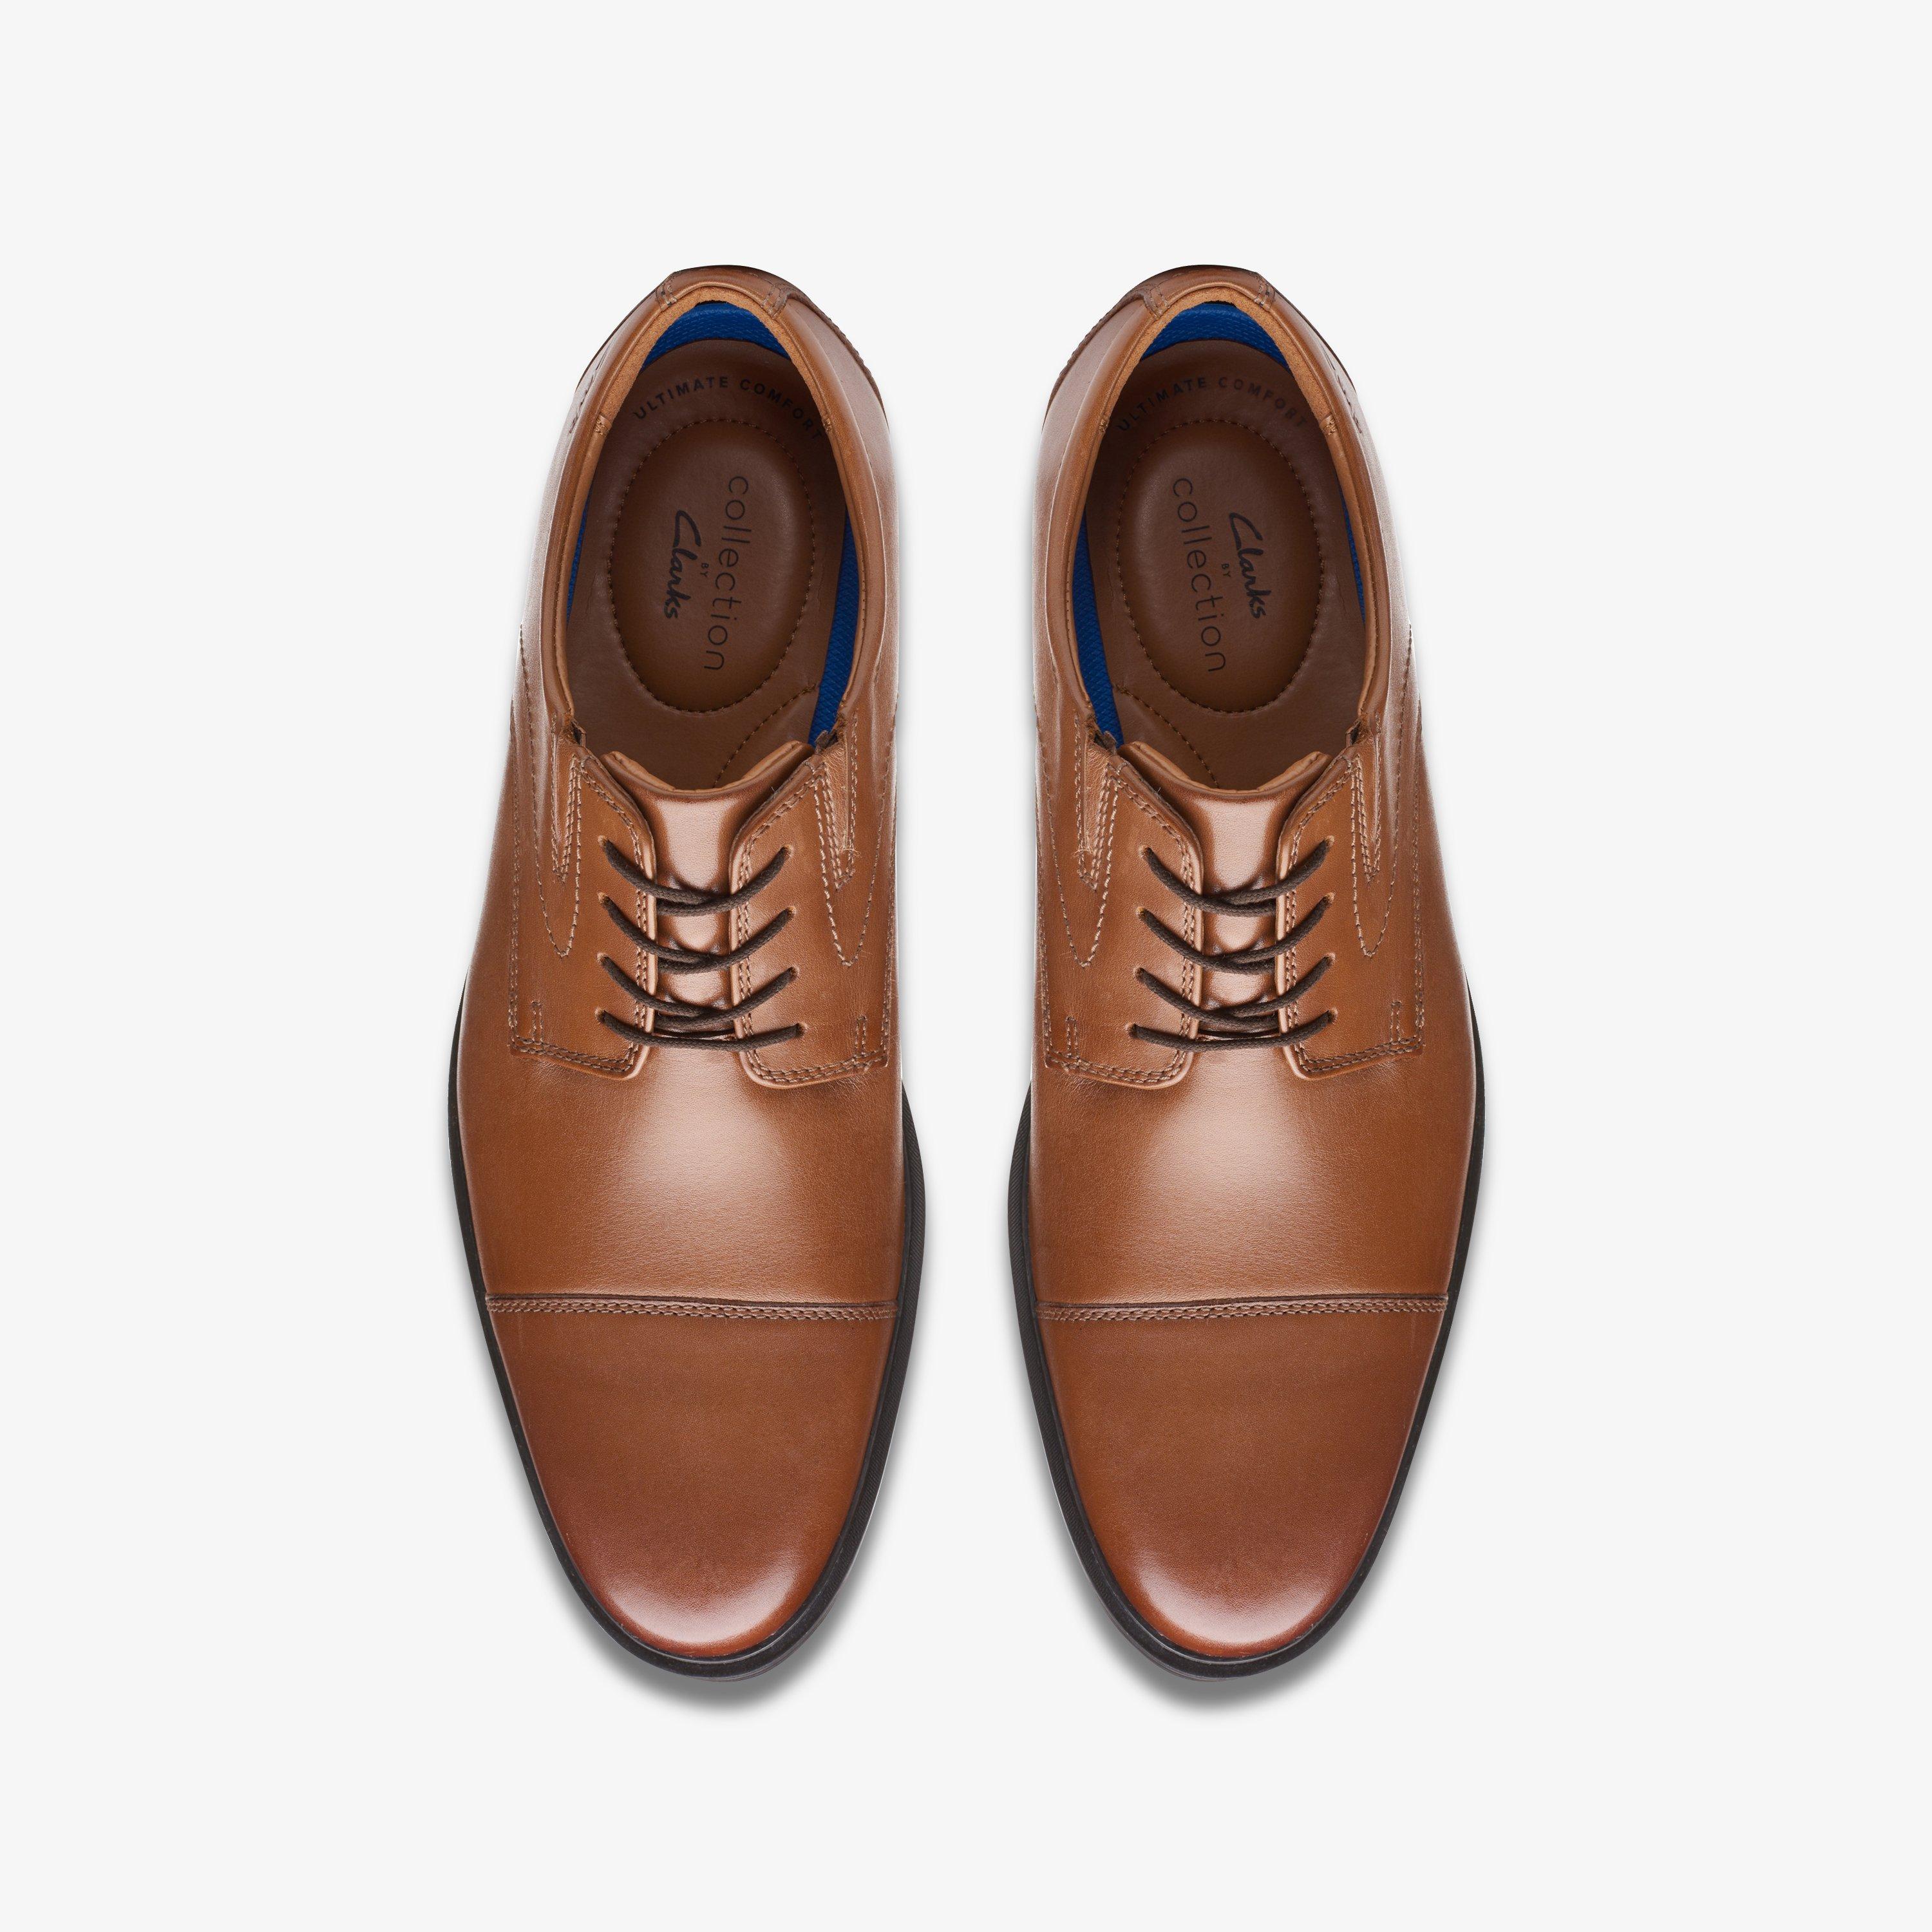 Men's Dress Casual Shoes - Business Casual & Smart